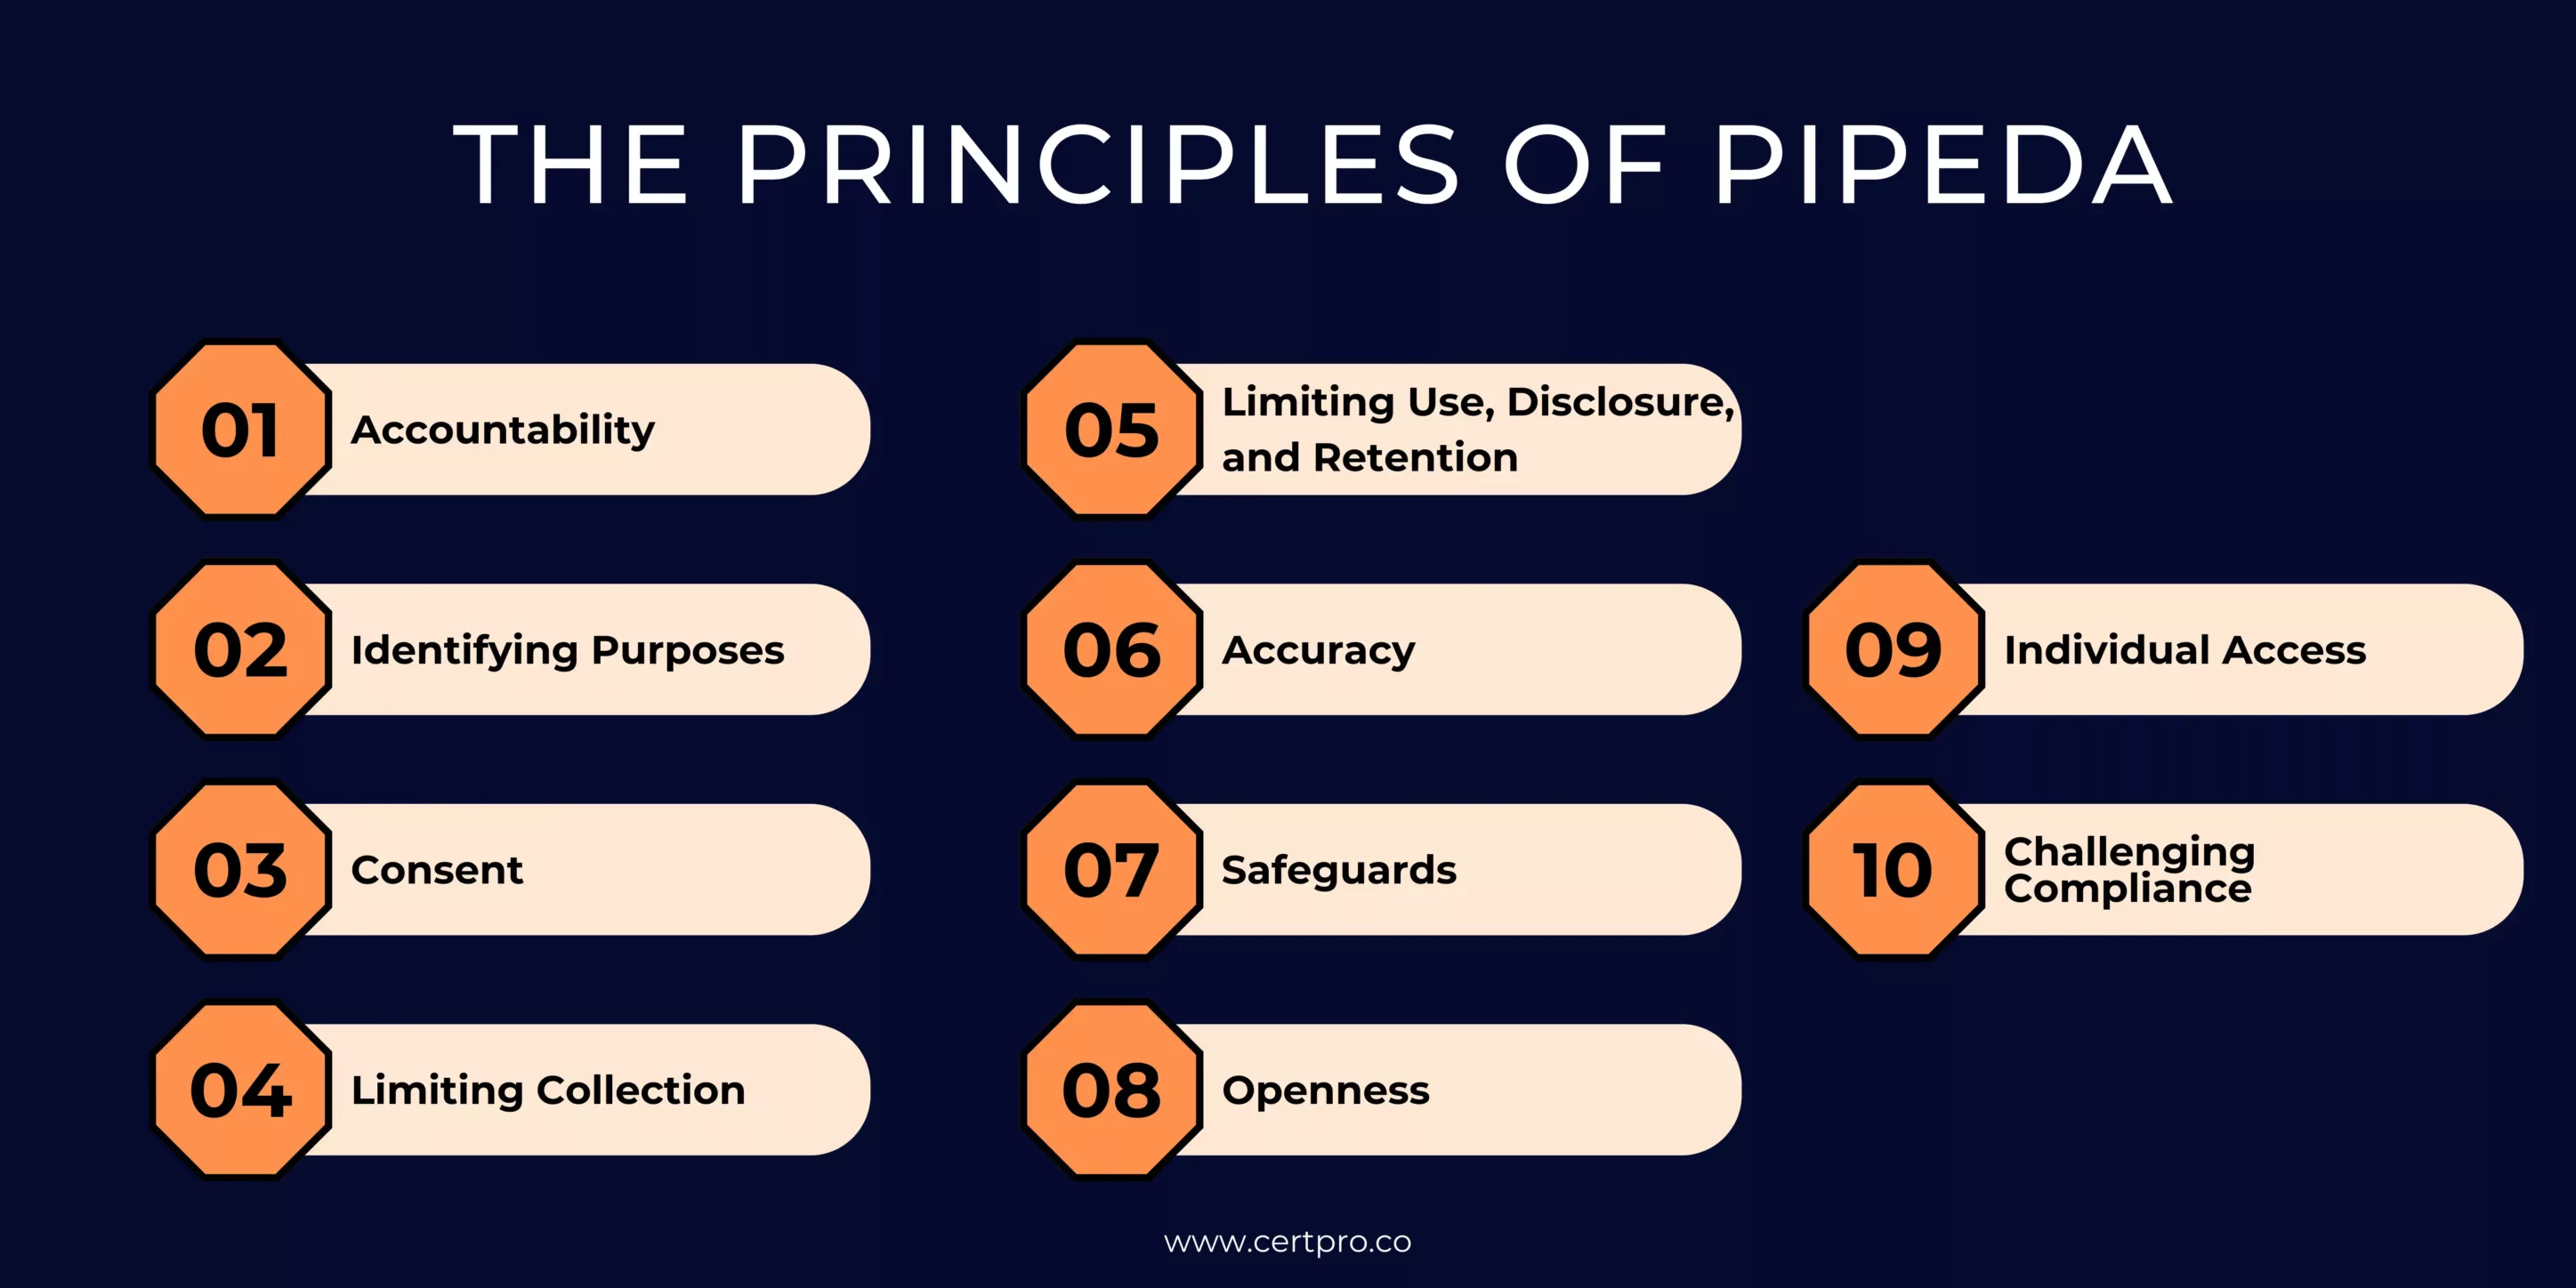 PRINCIPLES OF PIPEDA